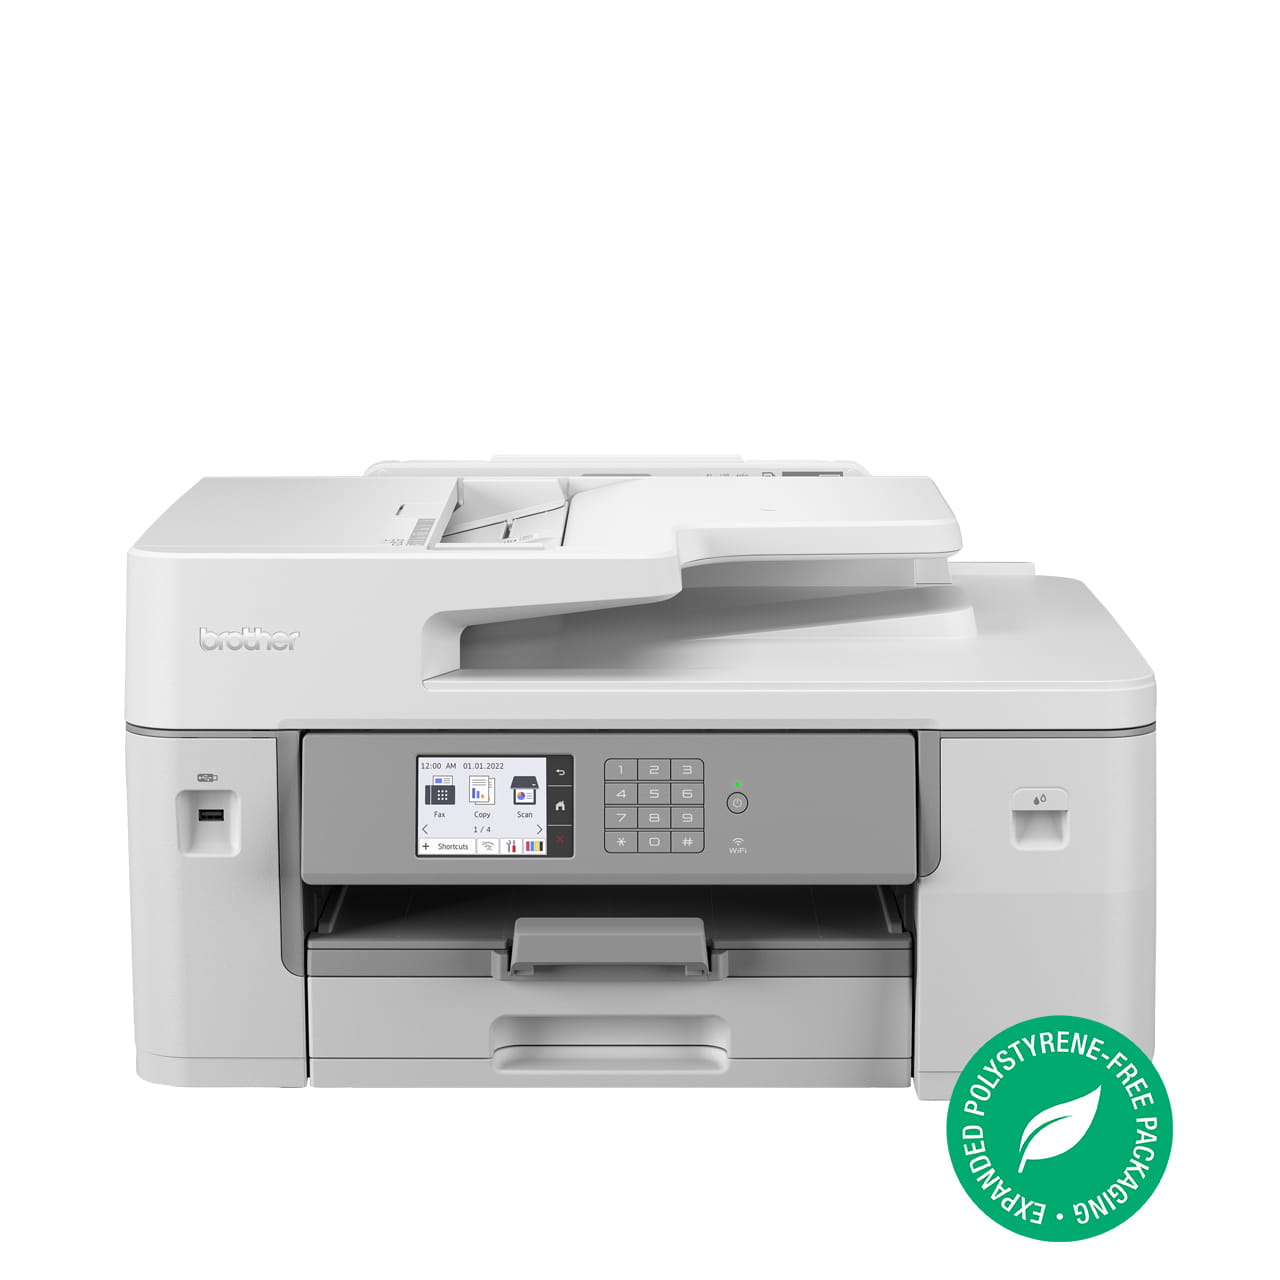 Multi-Function Printer - MFC-J6555DW XL Front View 